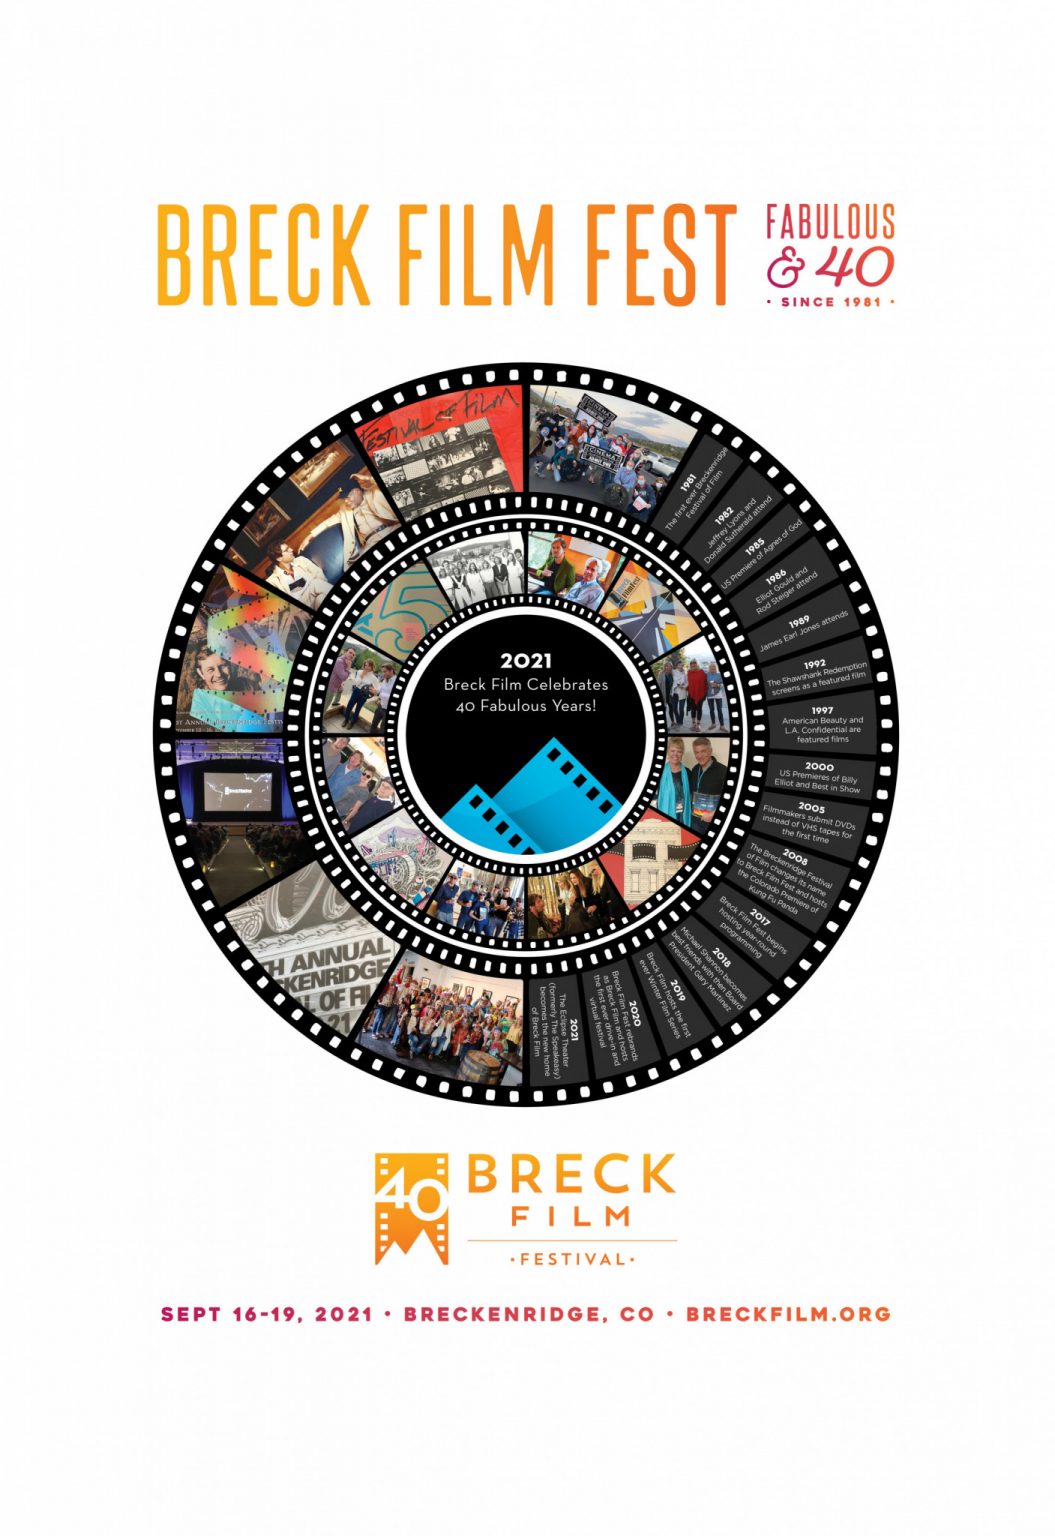 Breck Film Fest logo: Fabulous and 40